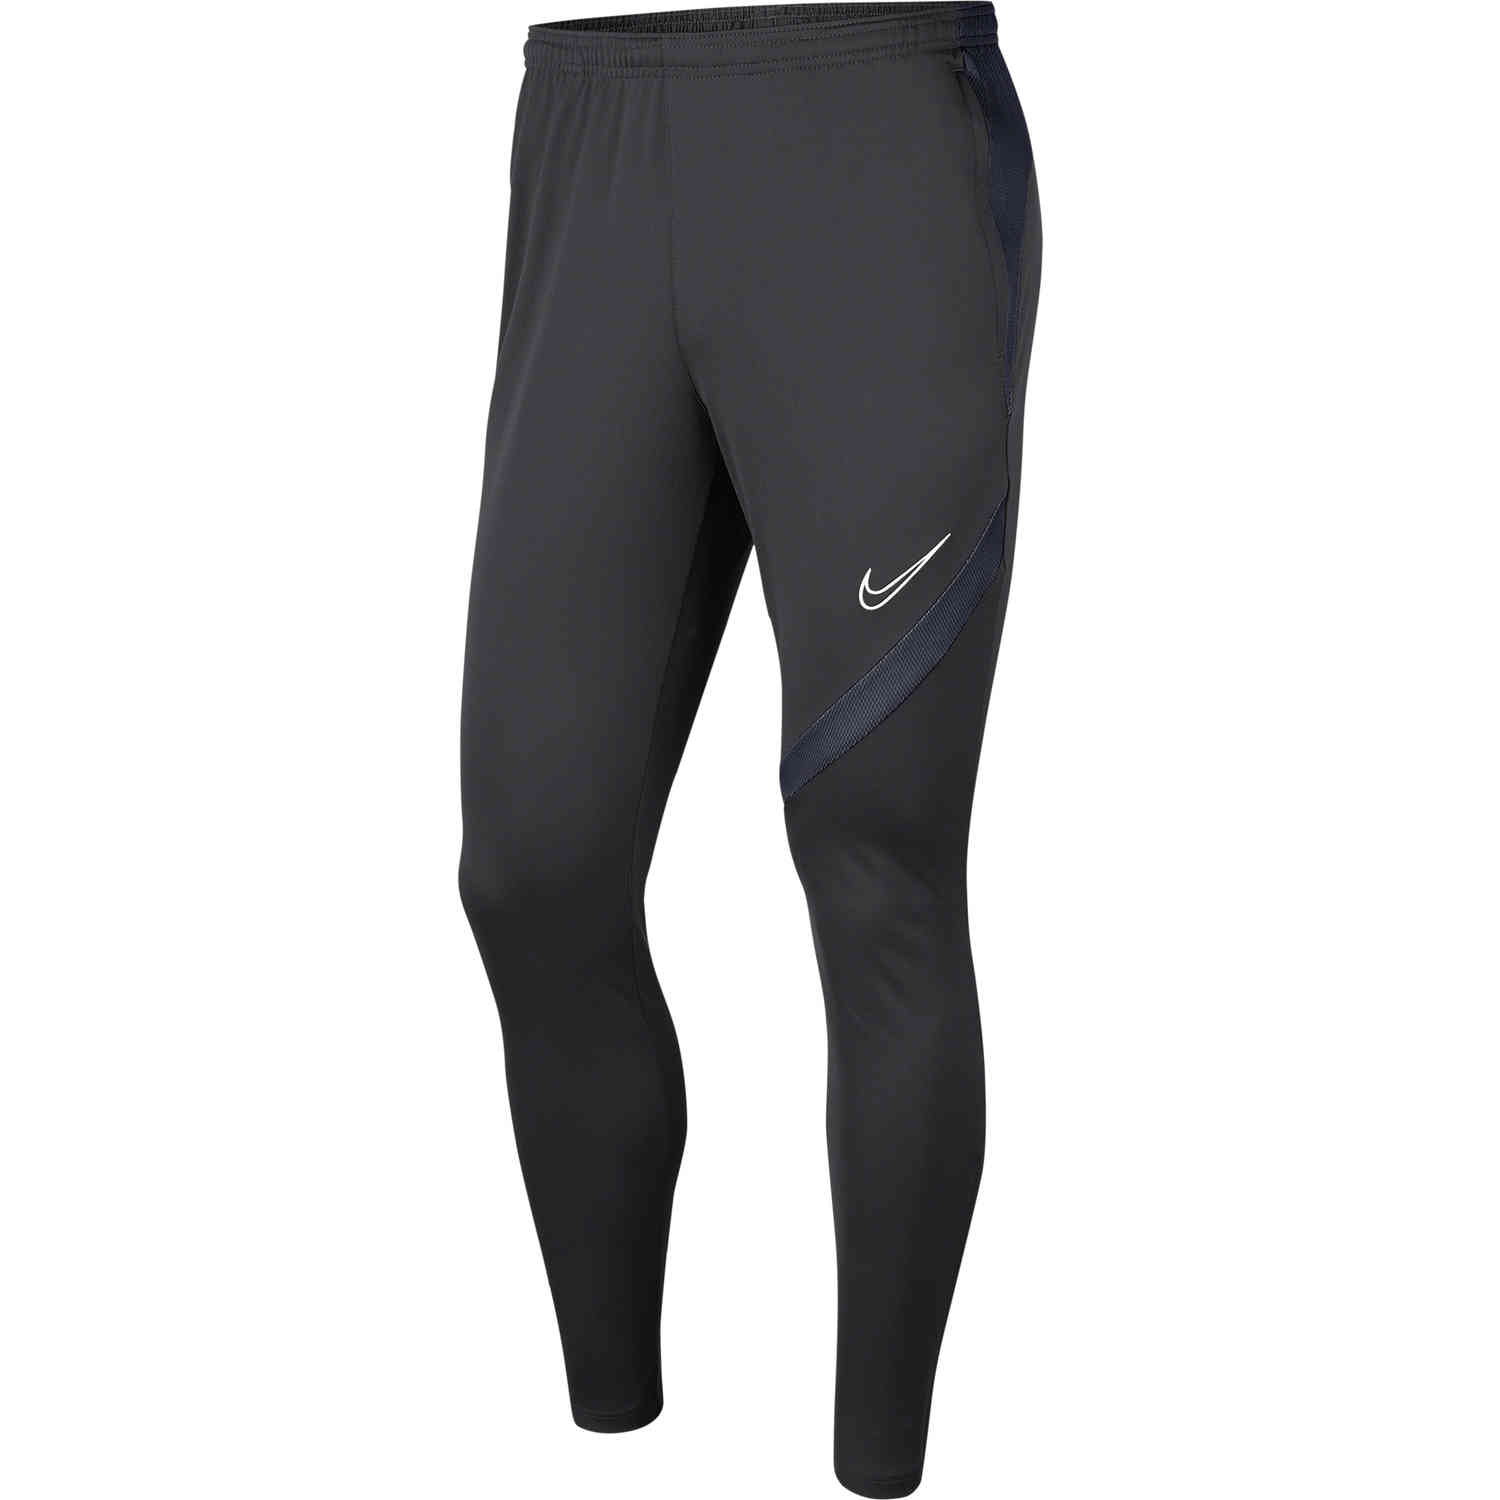 Superficial Asco derrochador Nike Academy Pro Training Pants - Anthracite/Obsidian - SoccerPro